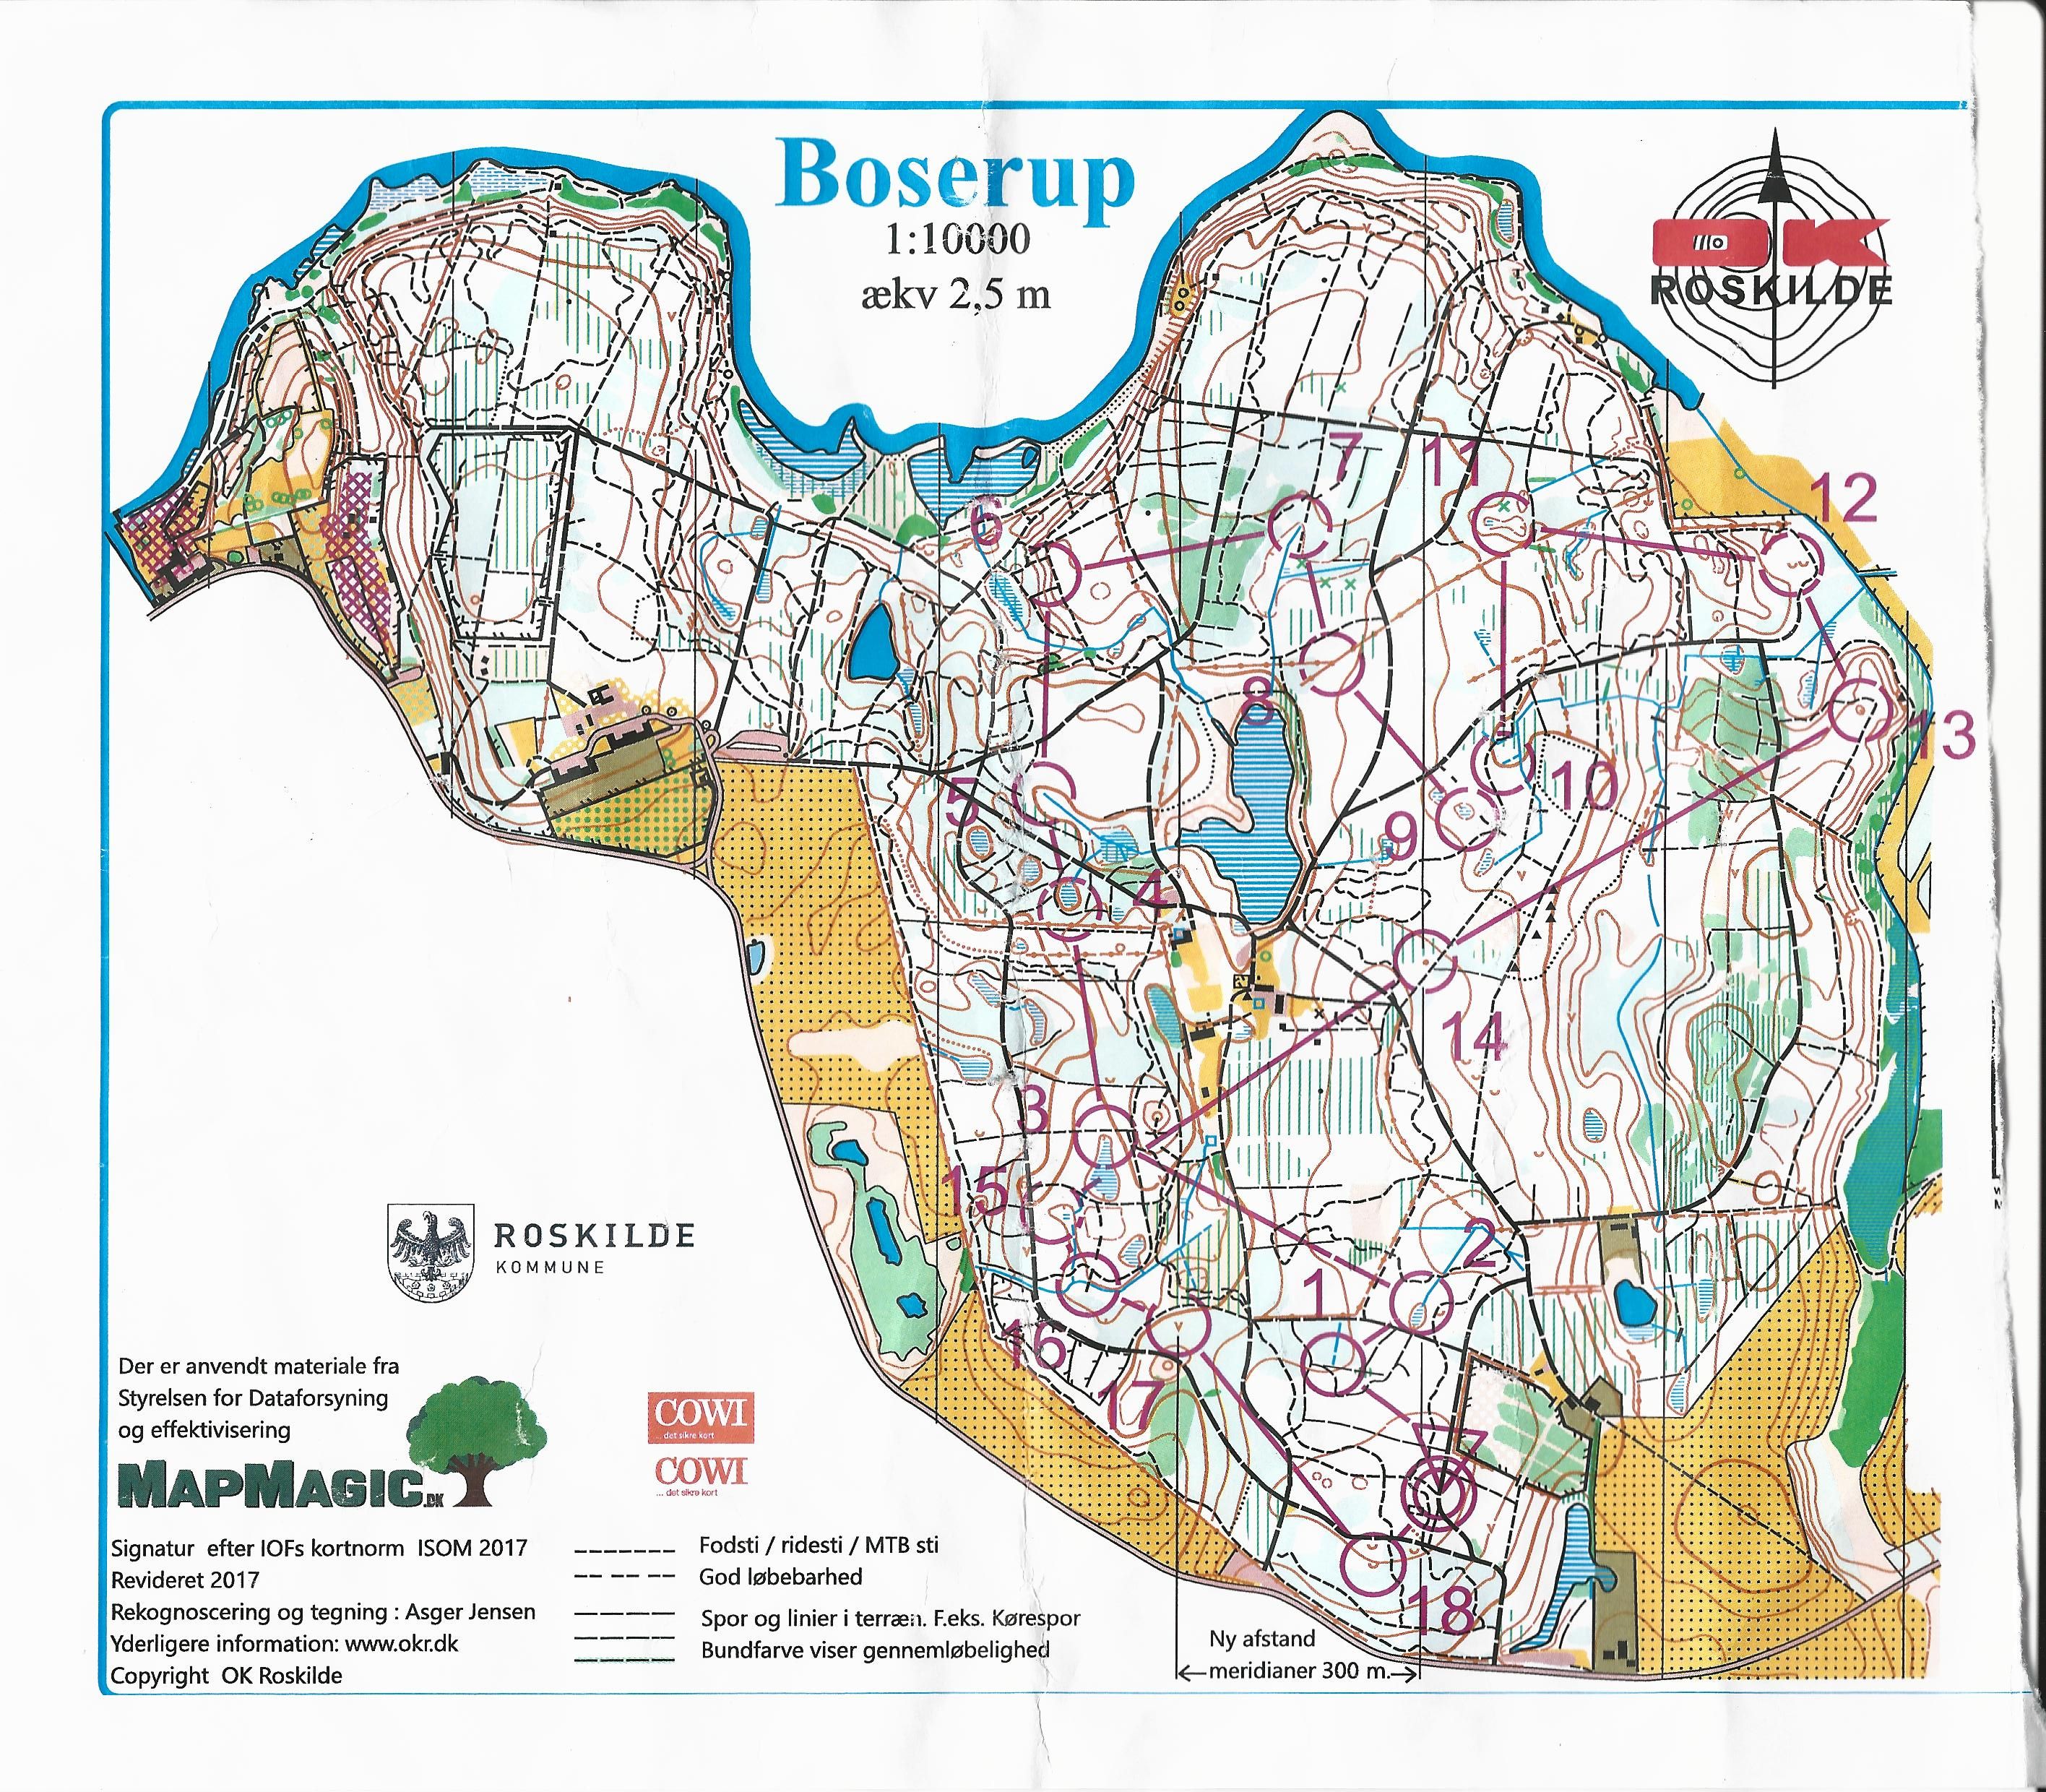 Mellemdistance-træning, Boserup (24-05-2021)